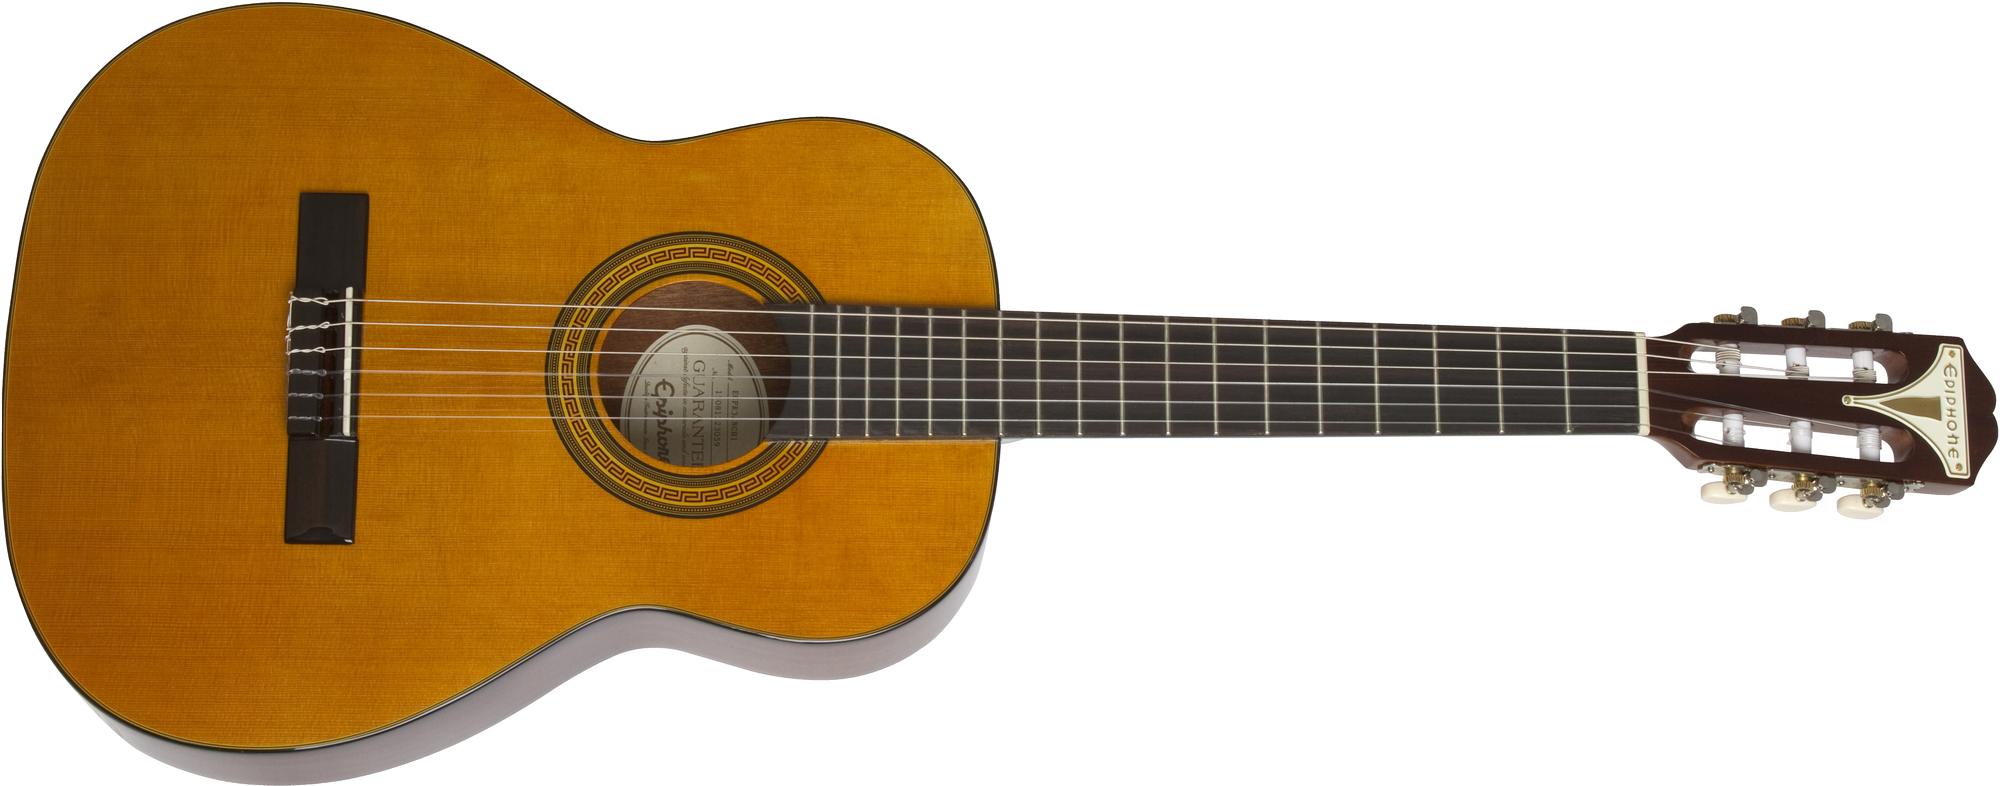 Epiphone PRO-1 Classic Nylon akustisk guitar